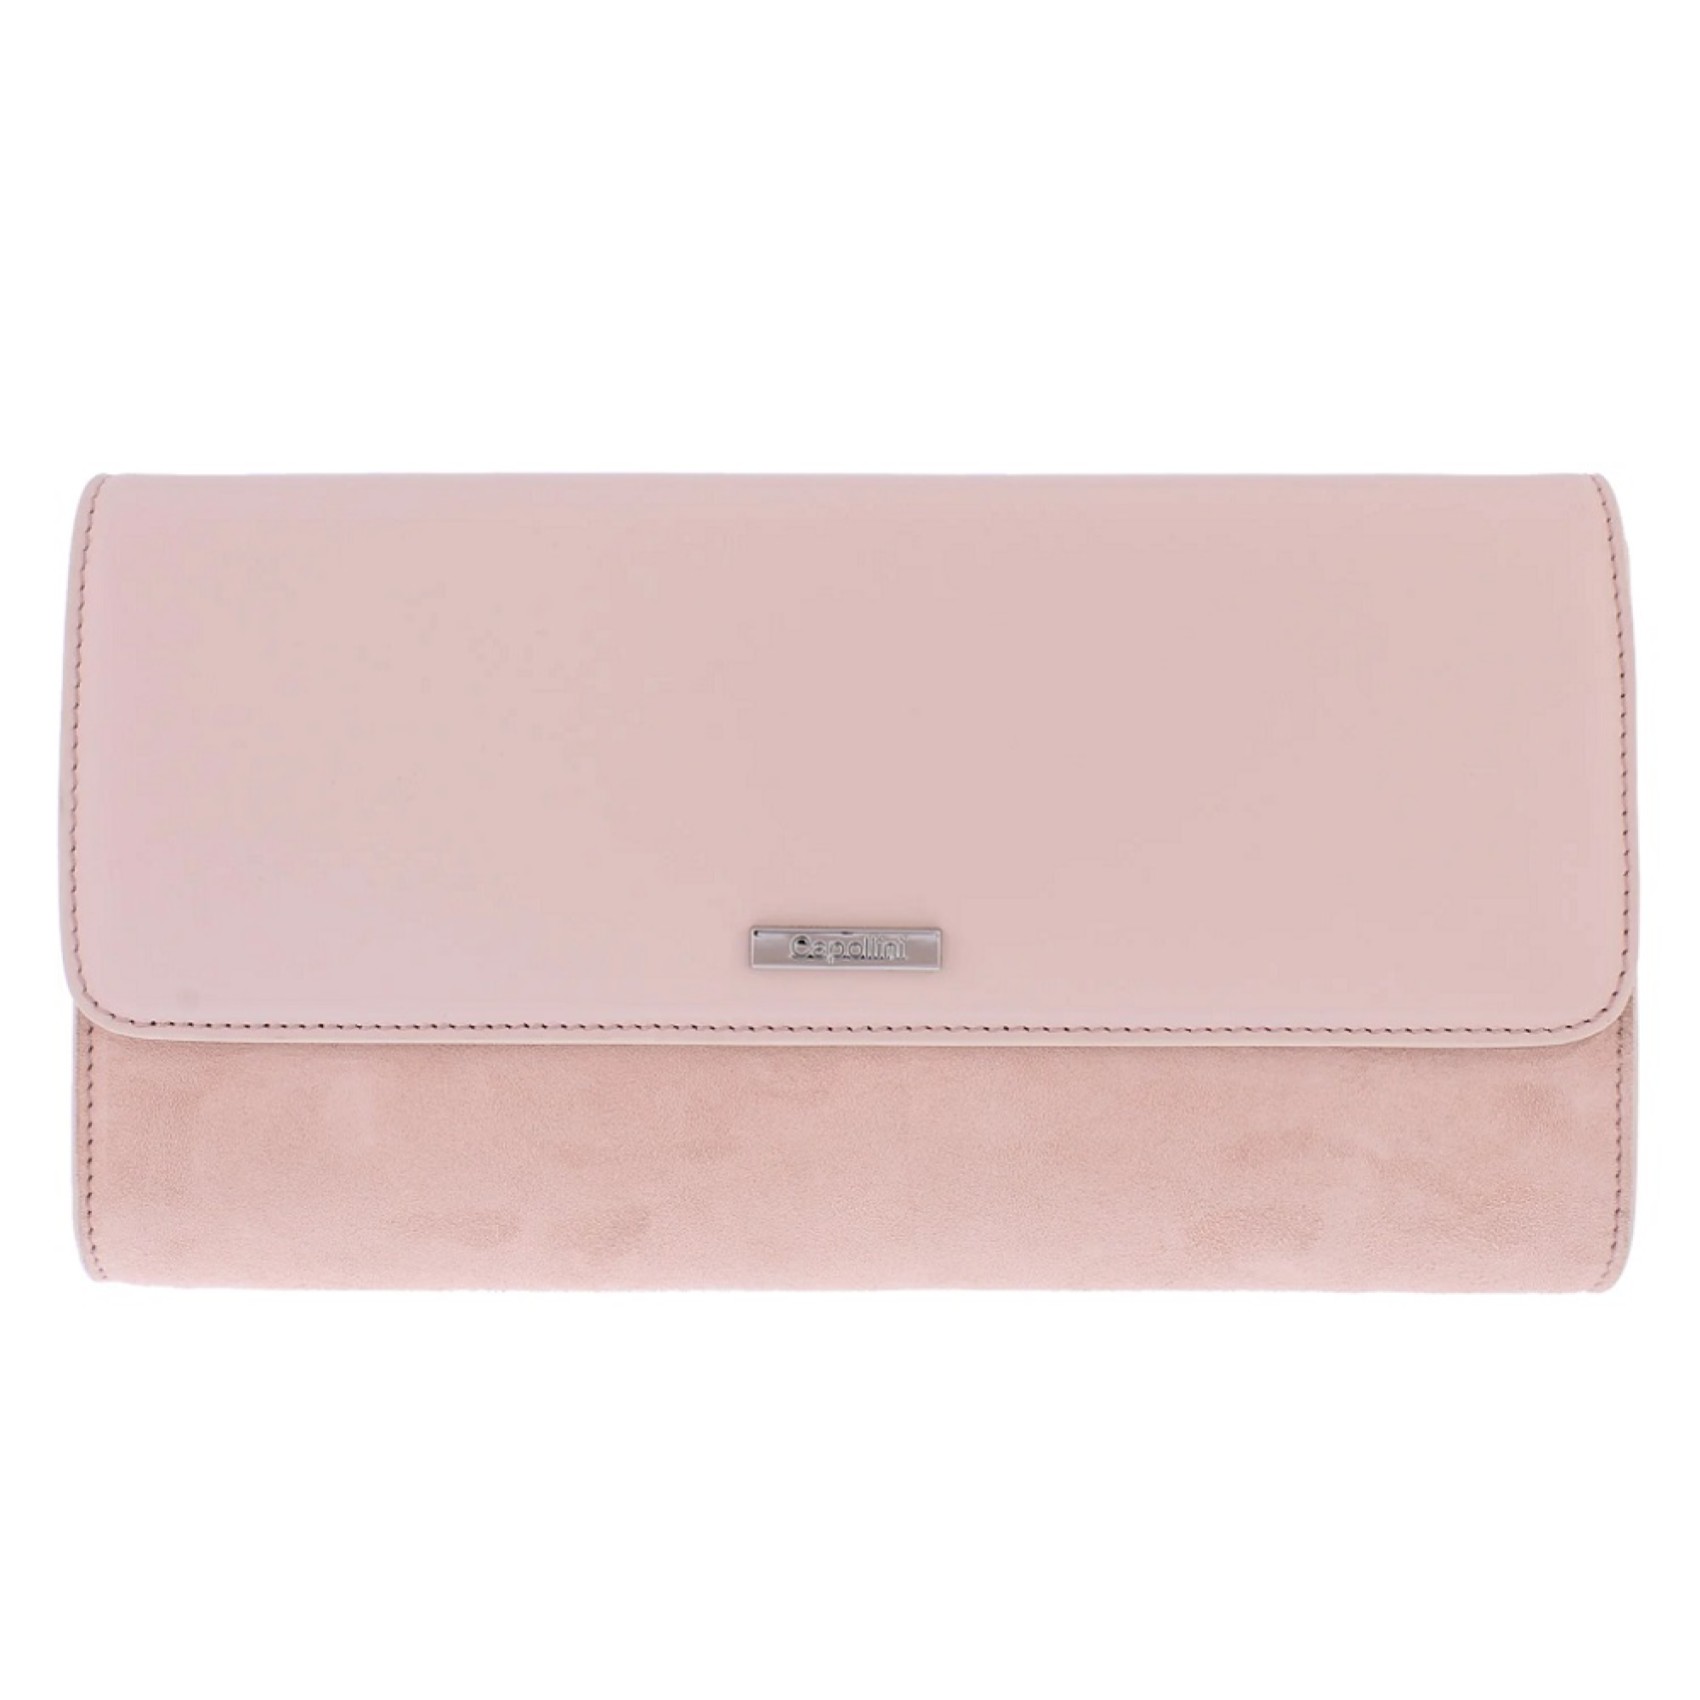 Pink Leather Designer Tote Suede Shoulder Bag For Women Genuine Leather  Messenger Handbag With Flap Closure From Xdbags, $46.64 | DHgate.Com